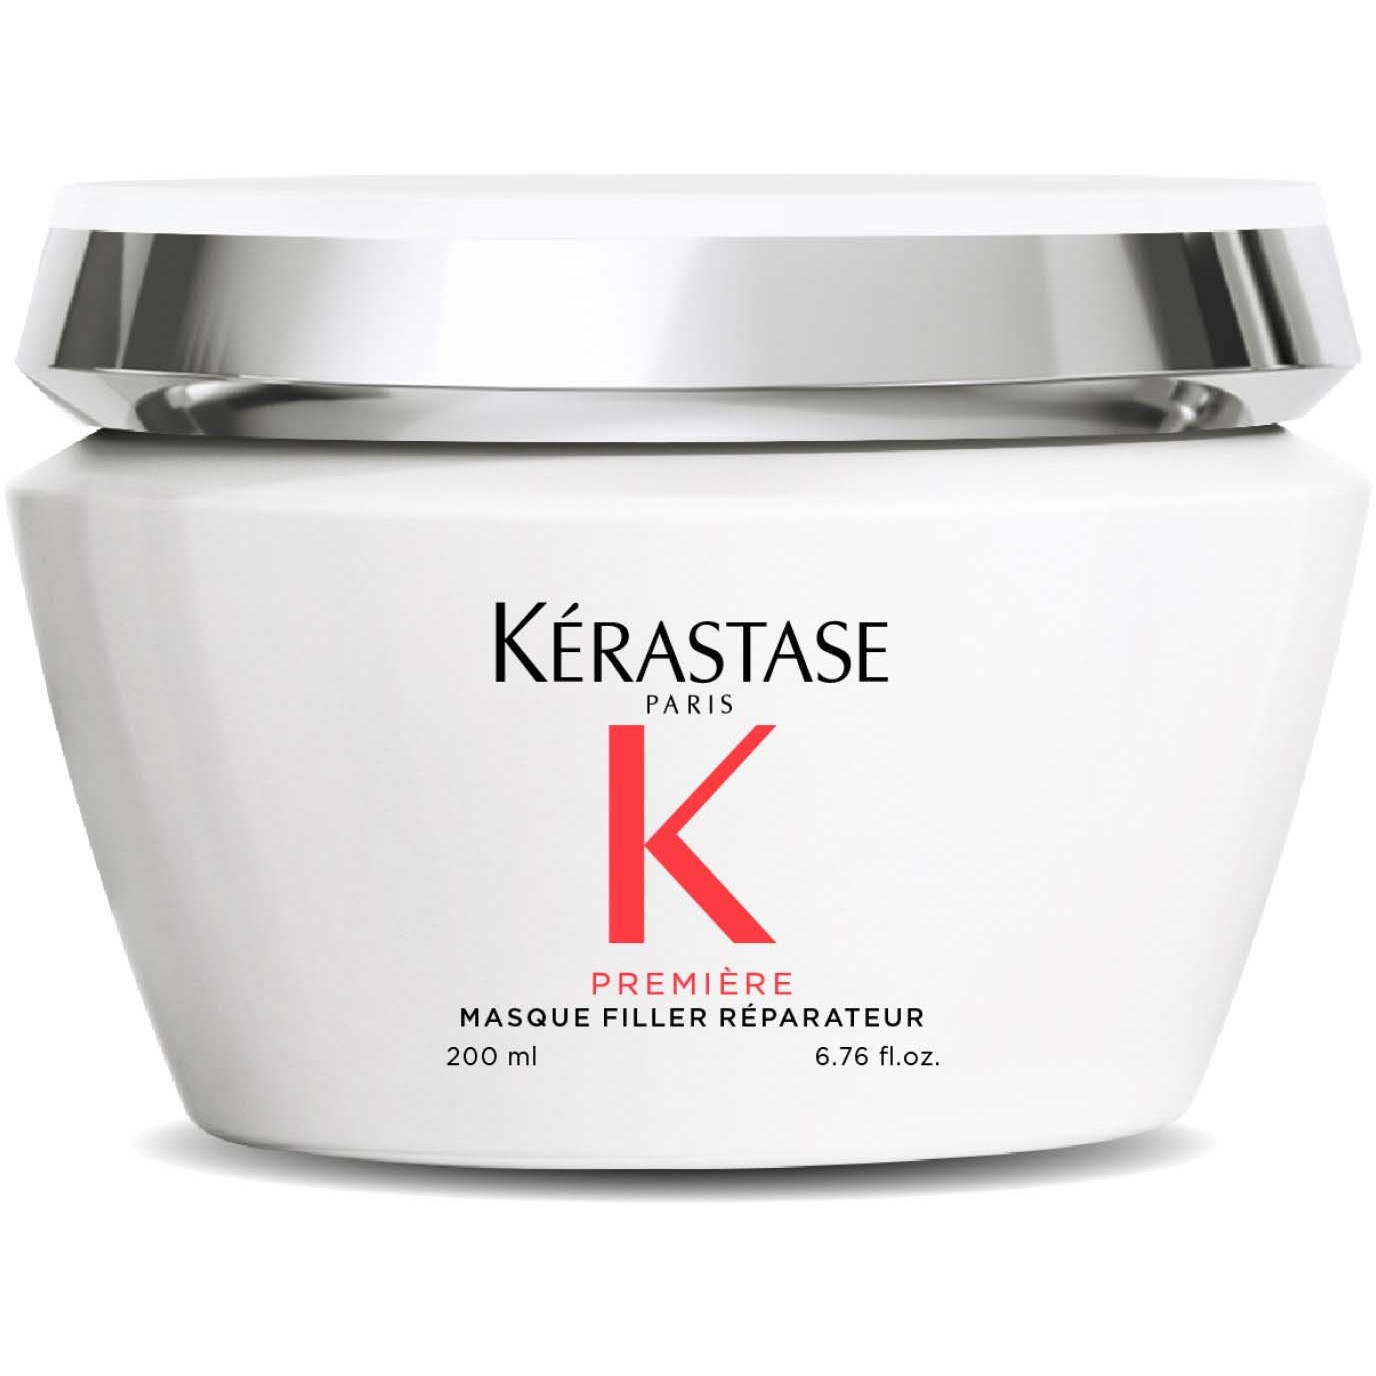 Kerastase Kérastase Première Masque Filler Réparateur Hair Mask 200 ml